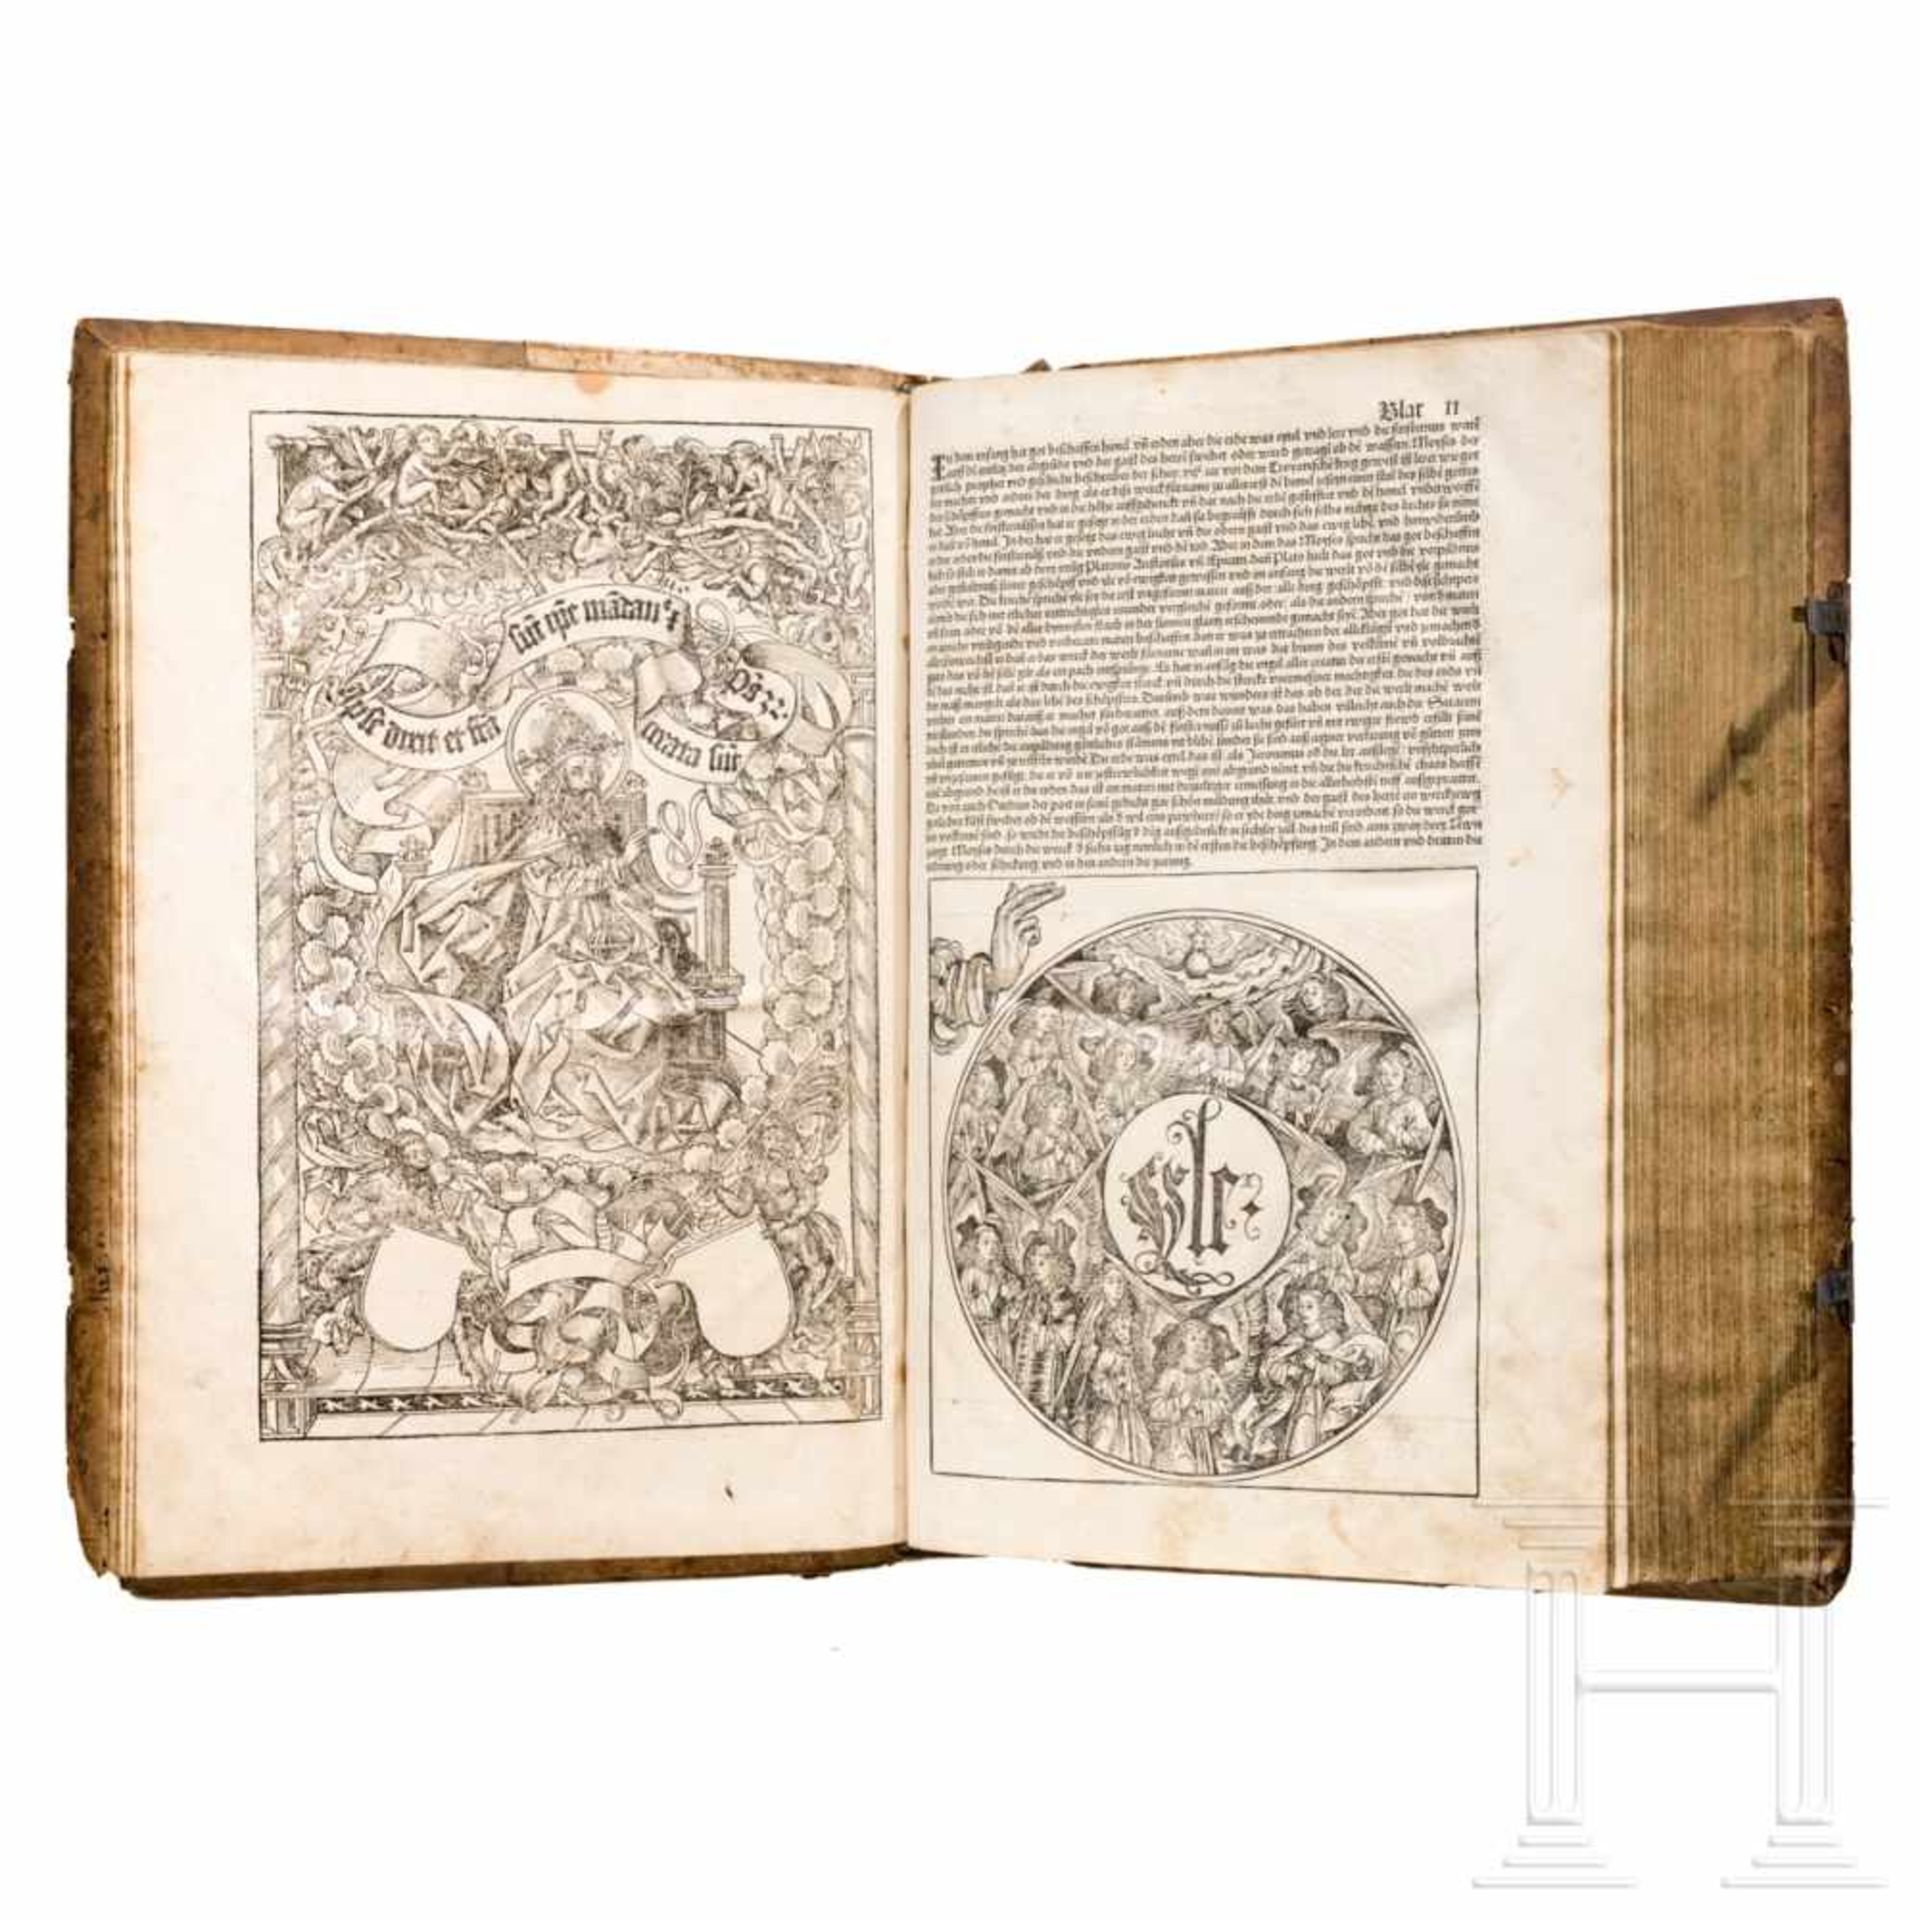 Hartmann Schedel, Das Buch der Chroniken, Nürnberg, A. Koberger, 1493 - Bild 9 aus 51